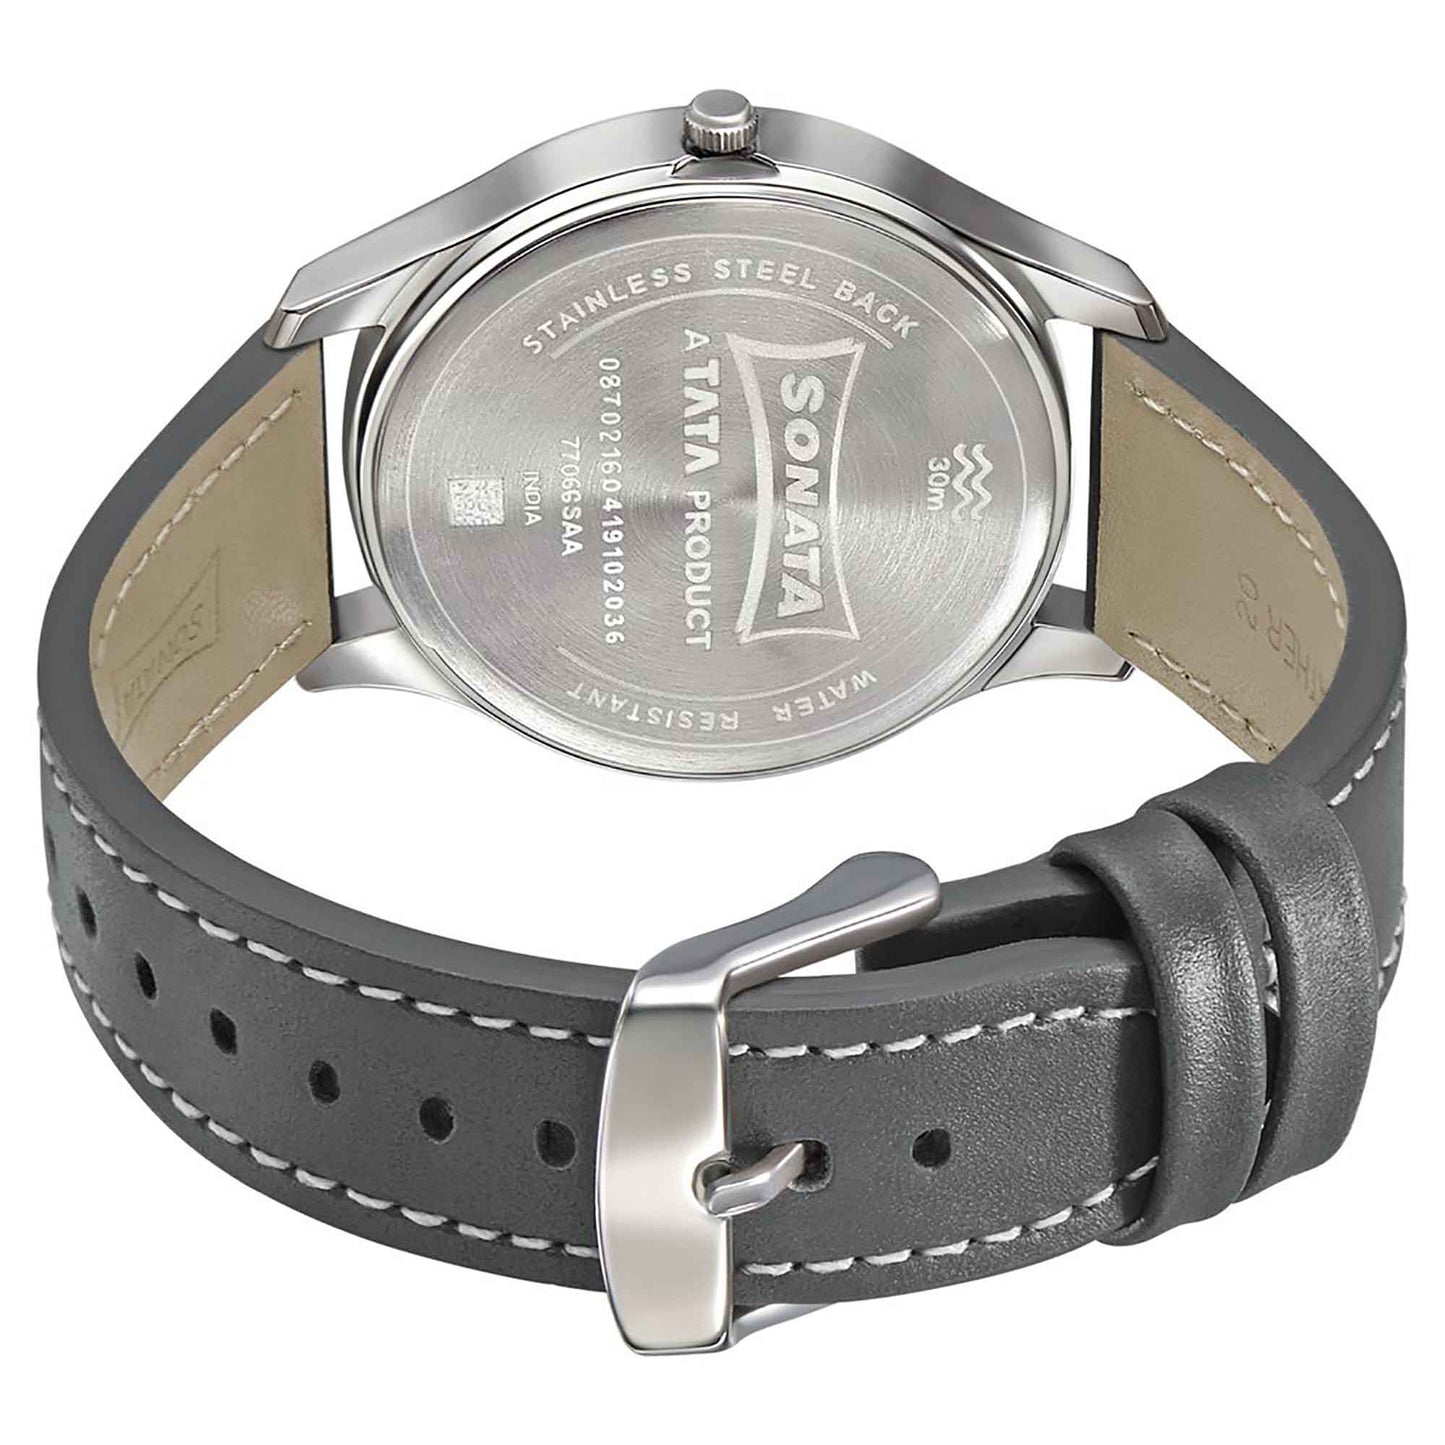 Sonata Quartz Analog Grey Dial Leather Strap Watch for Men